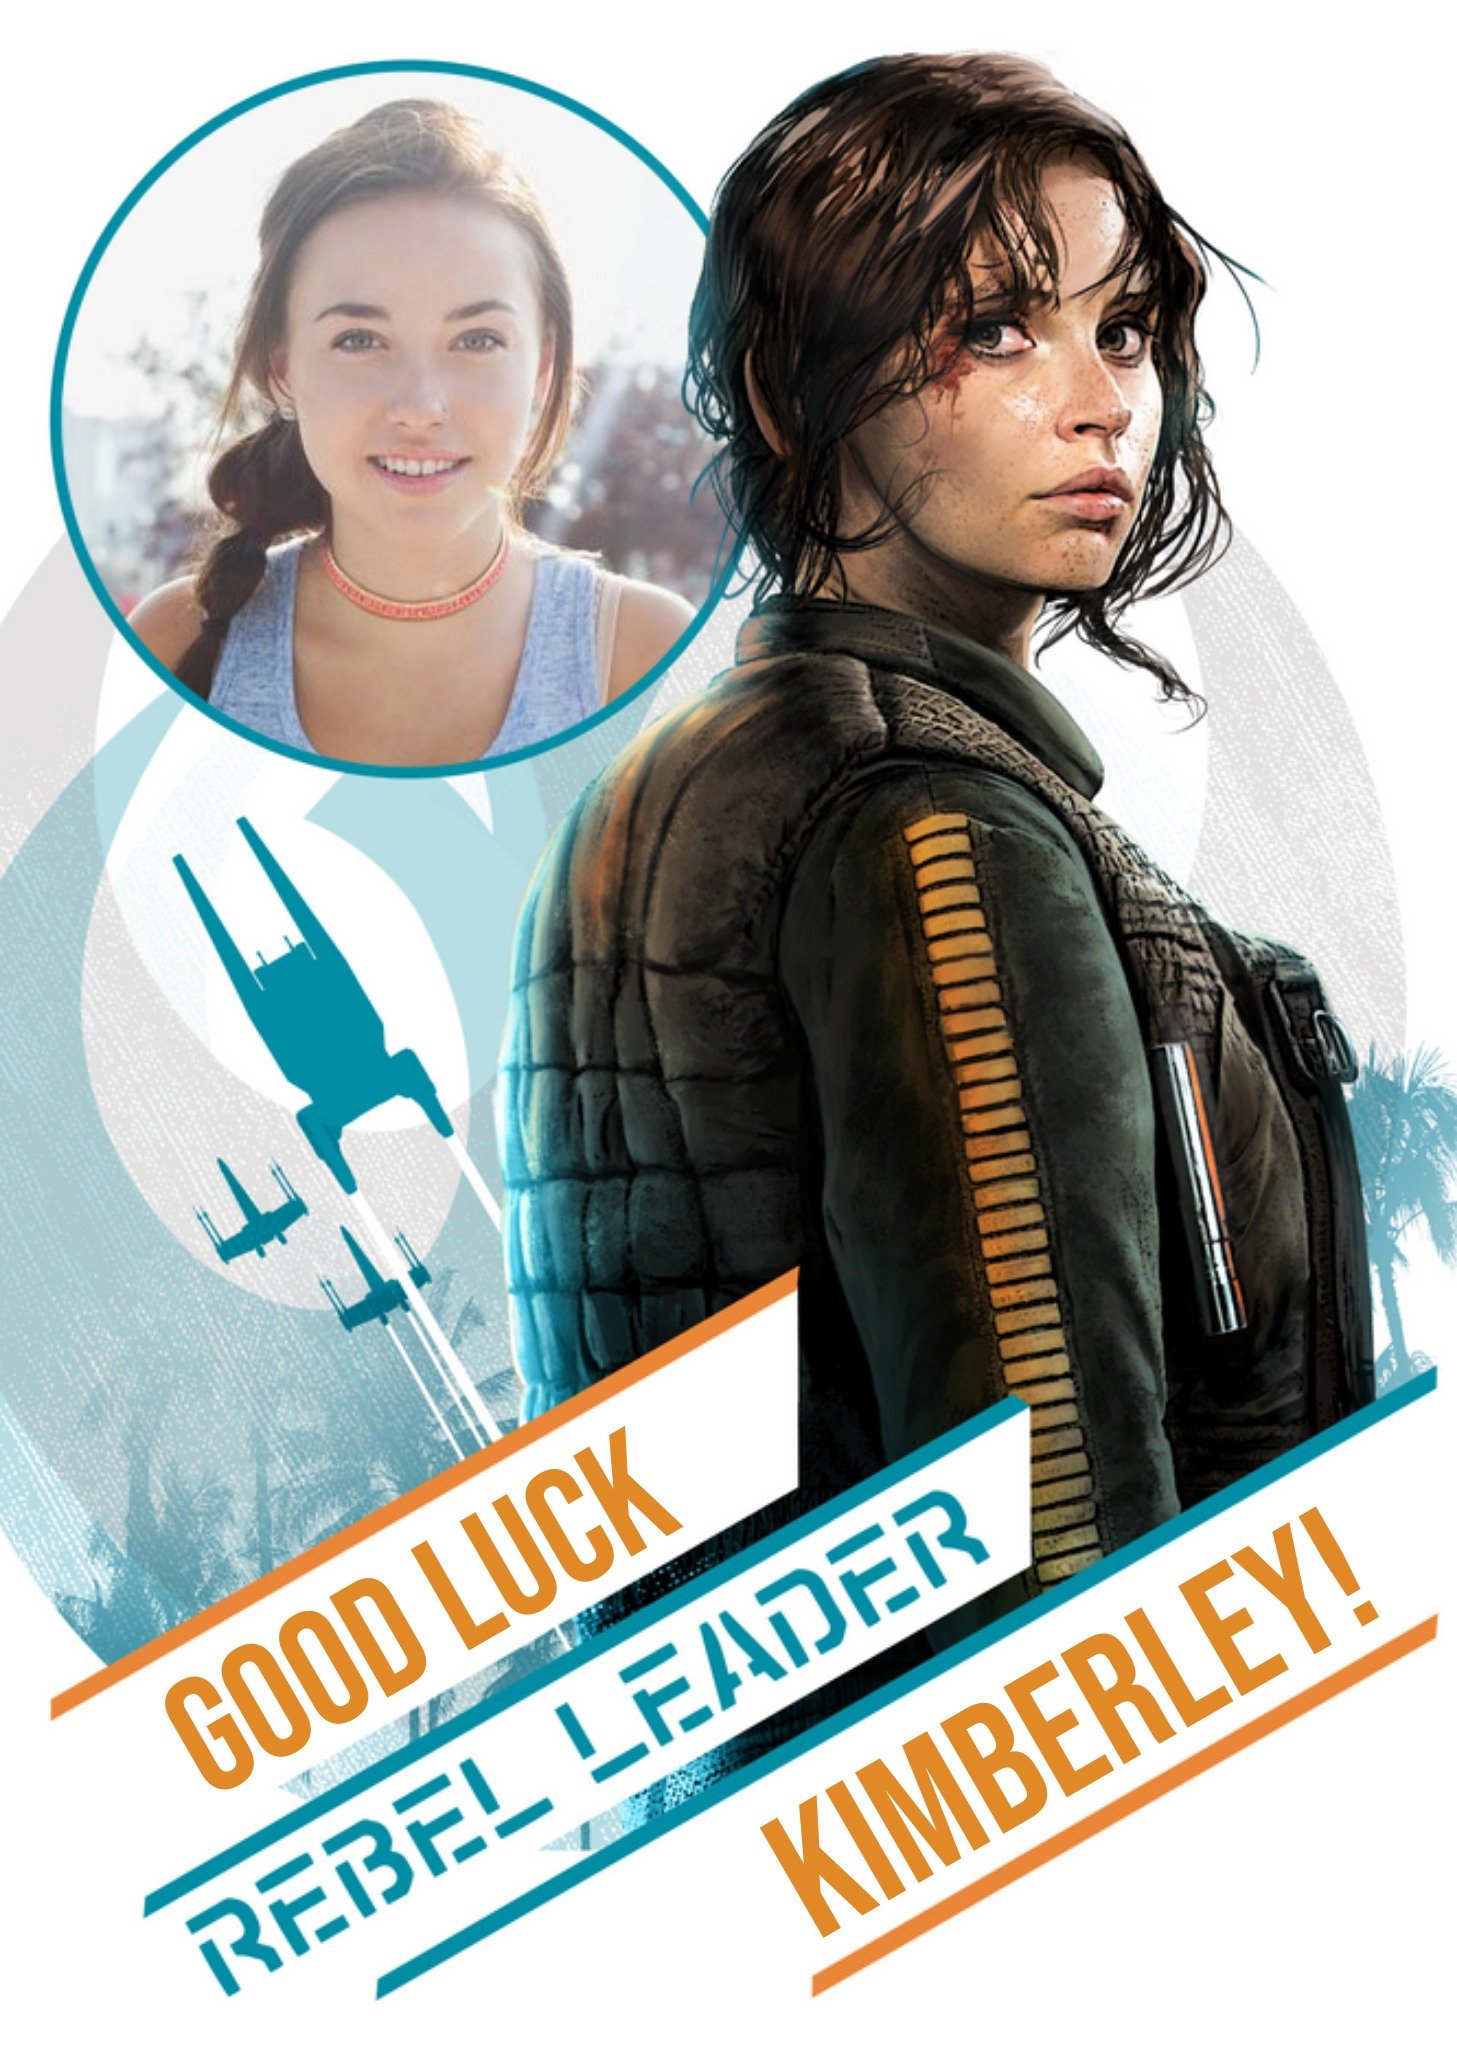 Disney Star Wars Rogue One Rebel Leader Photo Card Ecard